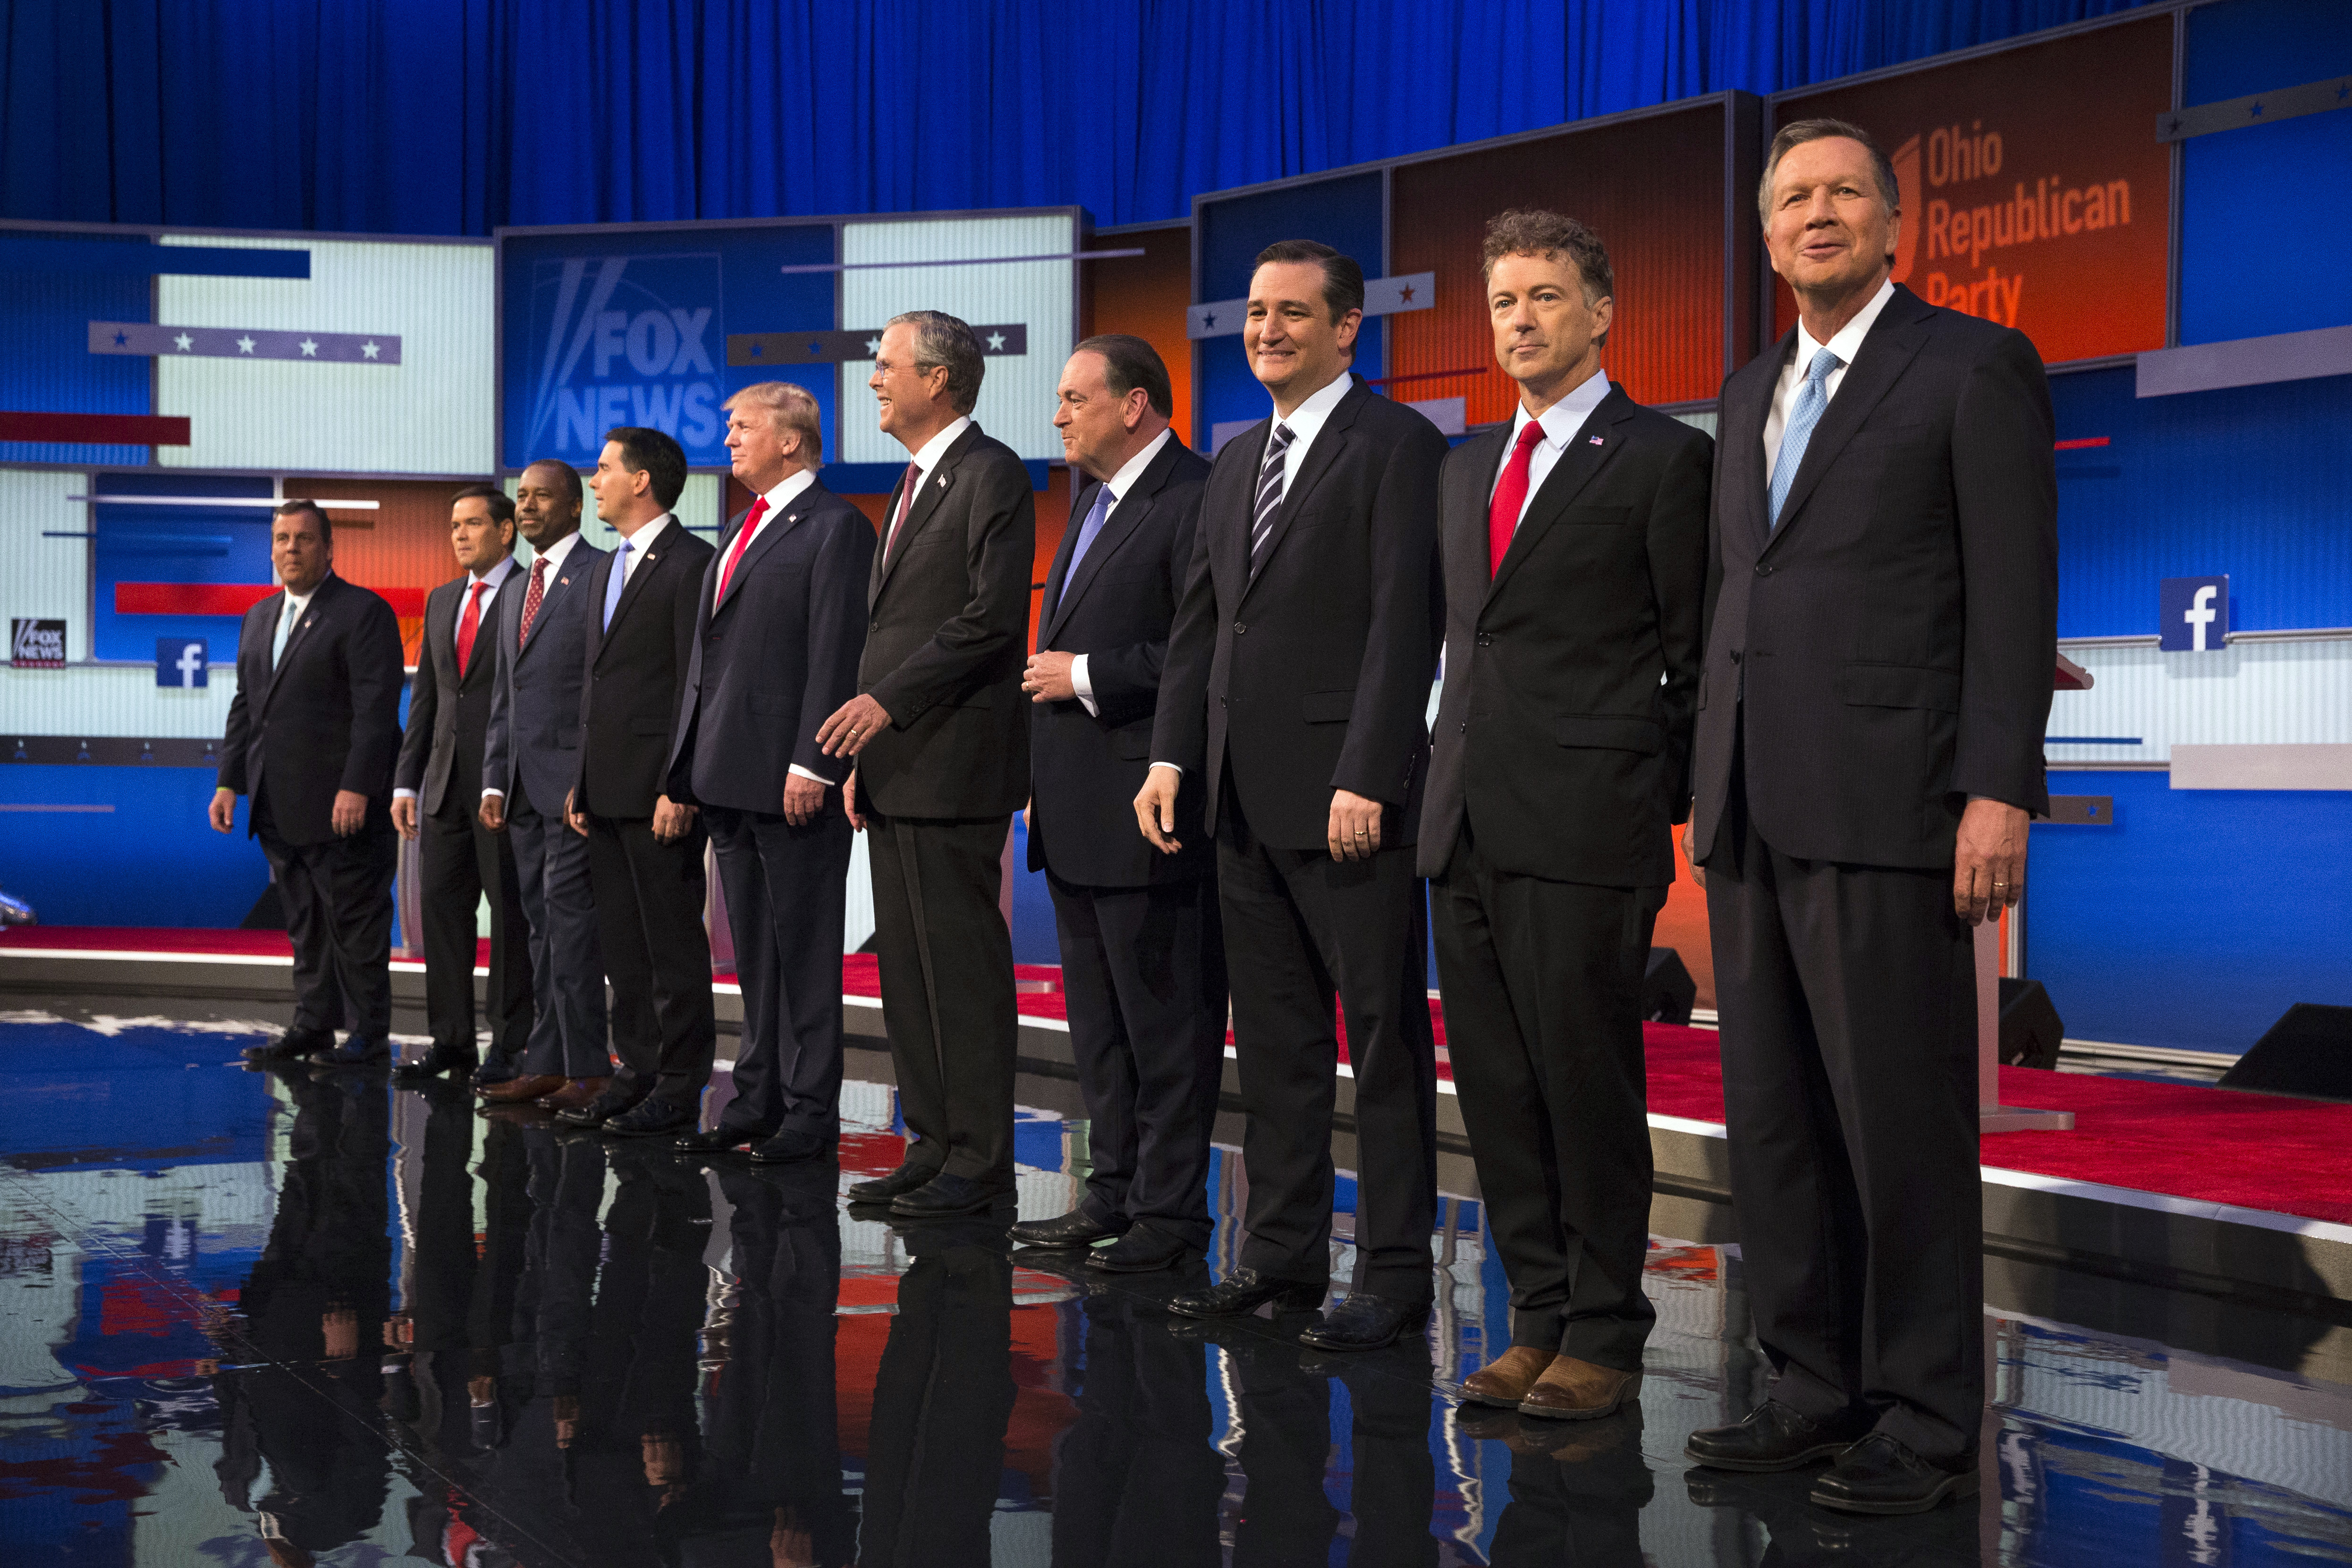 GOP Debate Highlights, analysis of the first Republican debate CBS News